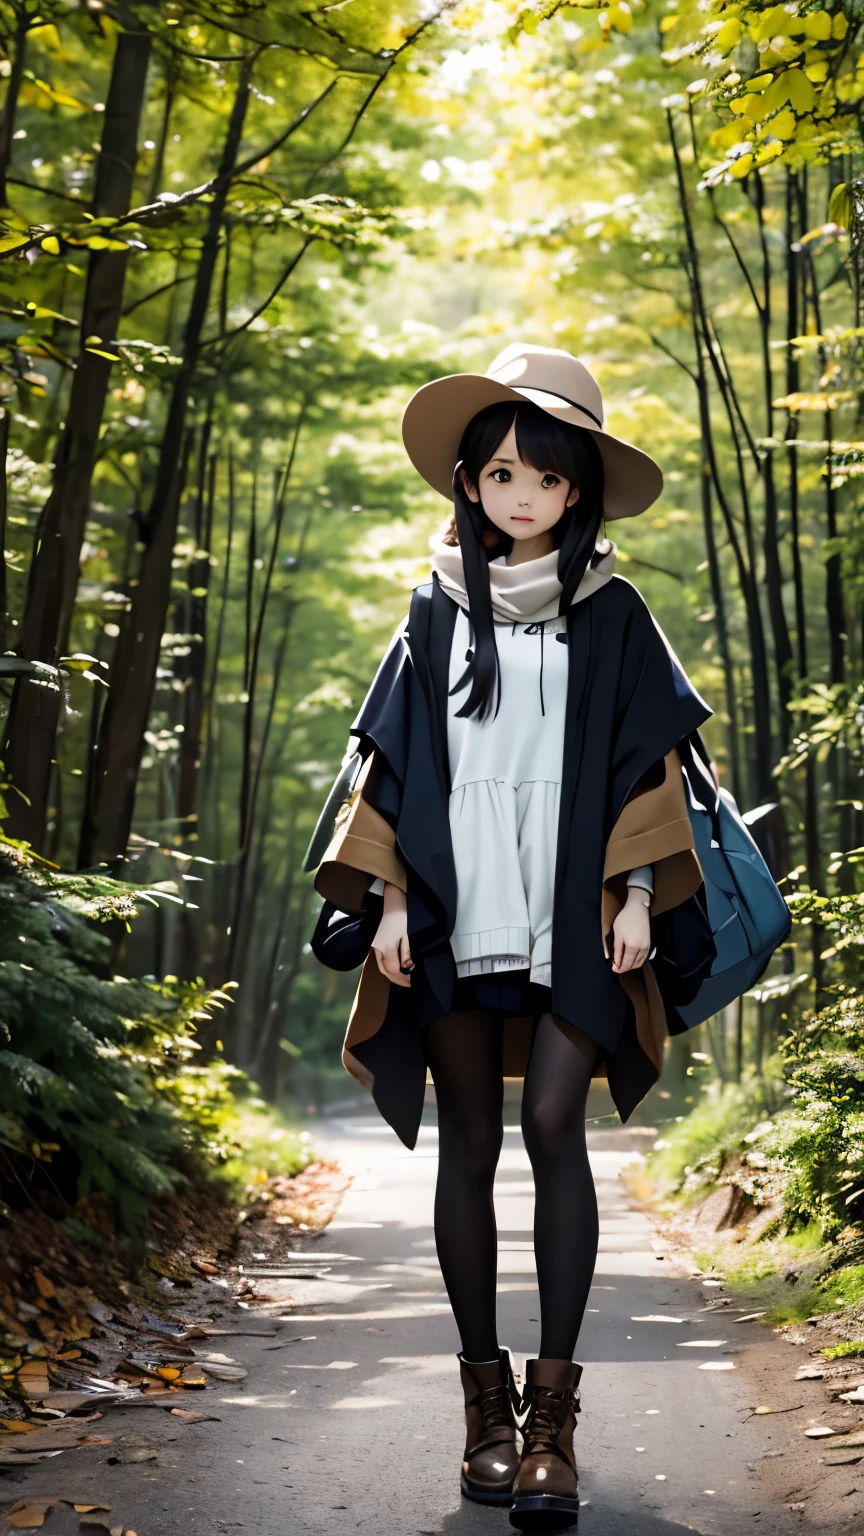 Una chica、sombrero de tulipán、Khaki poncho、mochila、bosque oscuro、Bosque profundo、caminando、